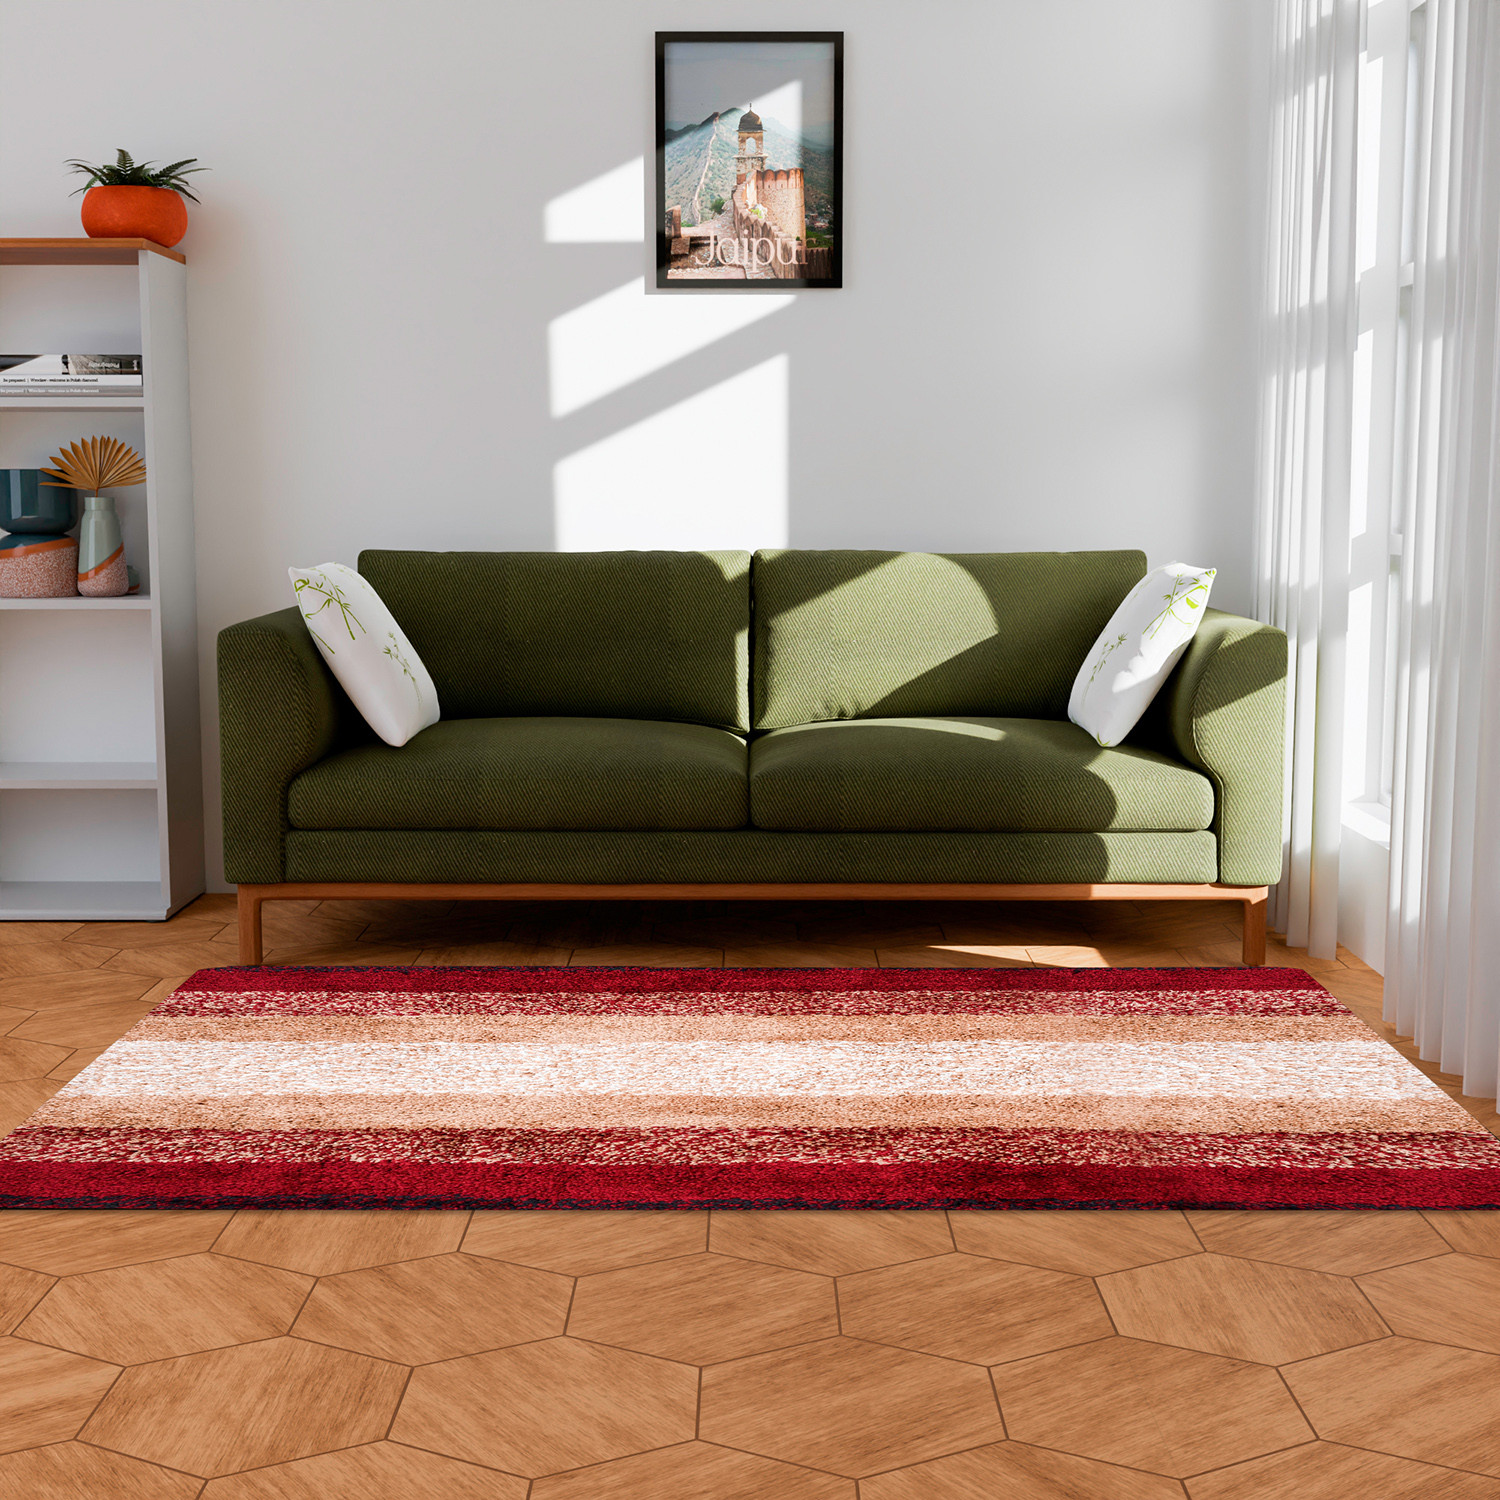 Kuber Industries Carpet | Shaggy Carpet for Living Room | Fluffy Door Mat | Maroon Patta Home Decor Carpet & Door Mat Combo | Floor Carpet Rug & Door Mat Set | Set of 2 | Cream